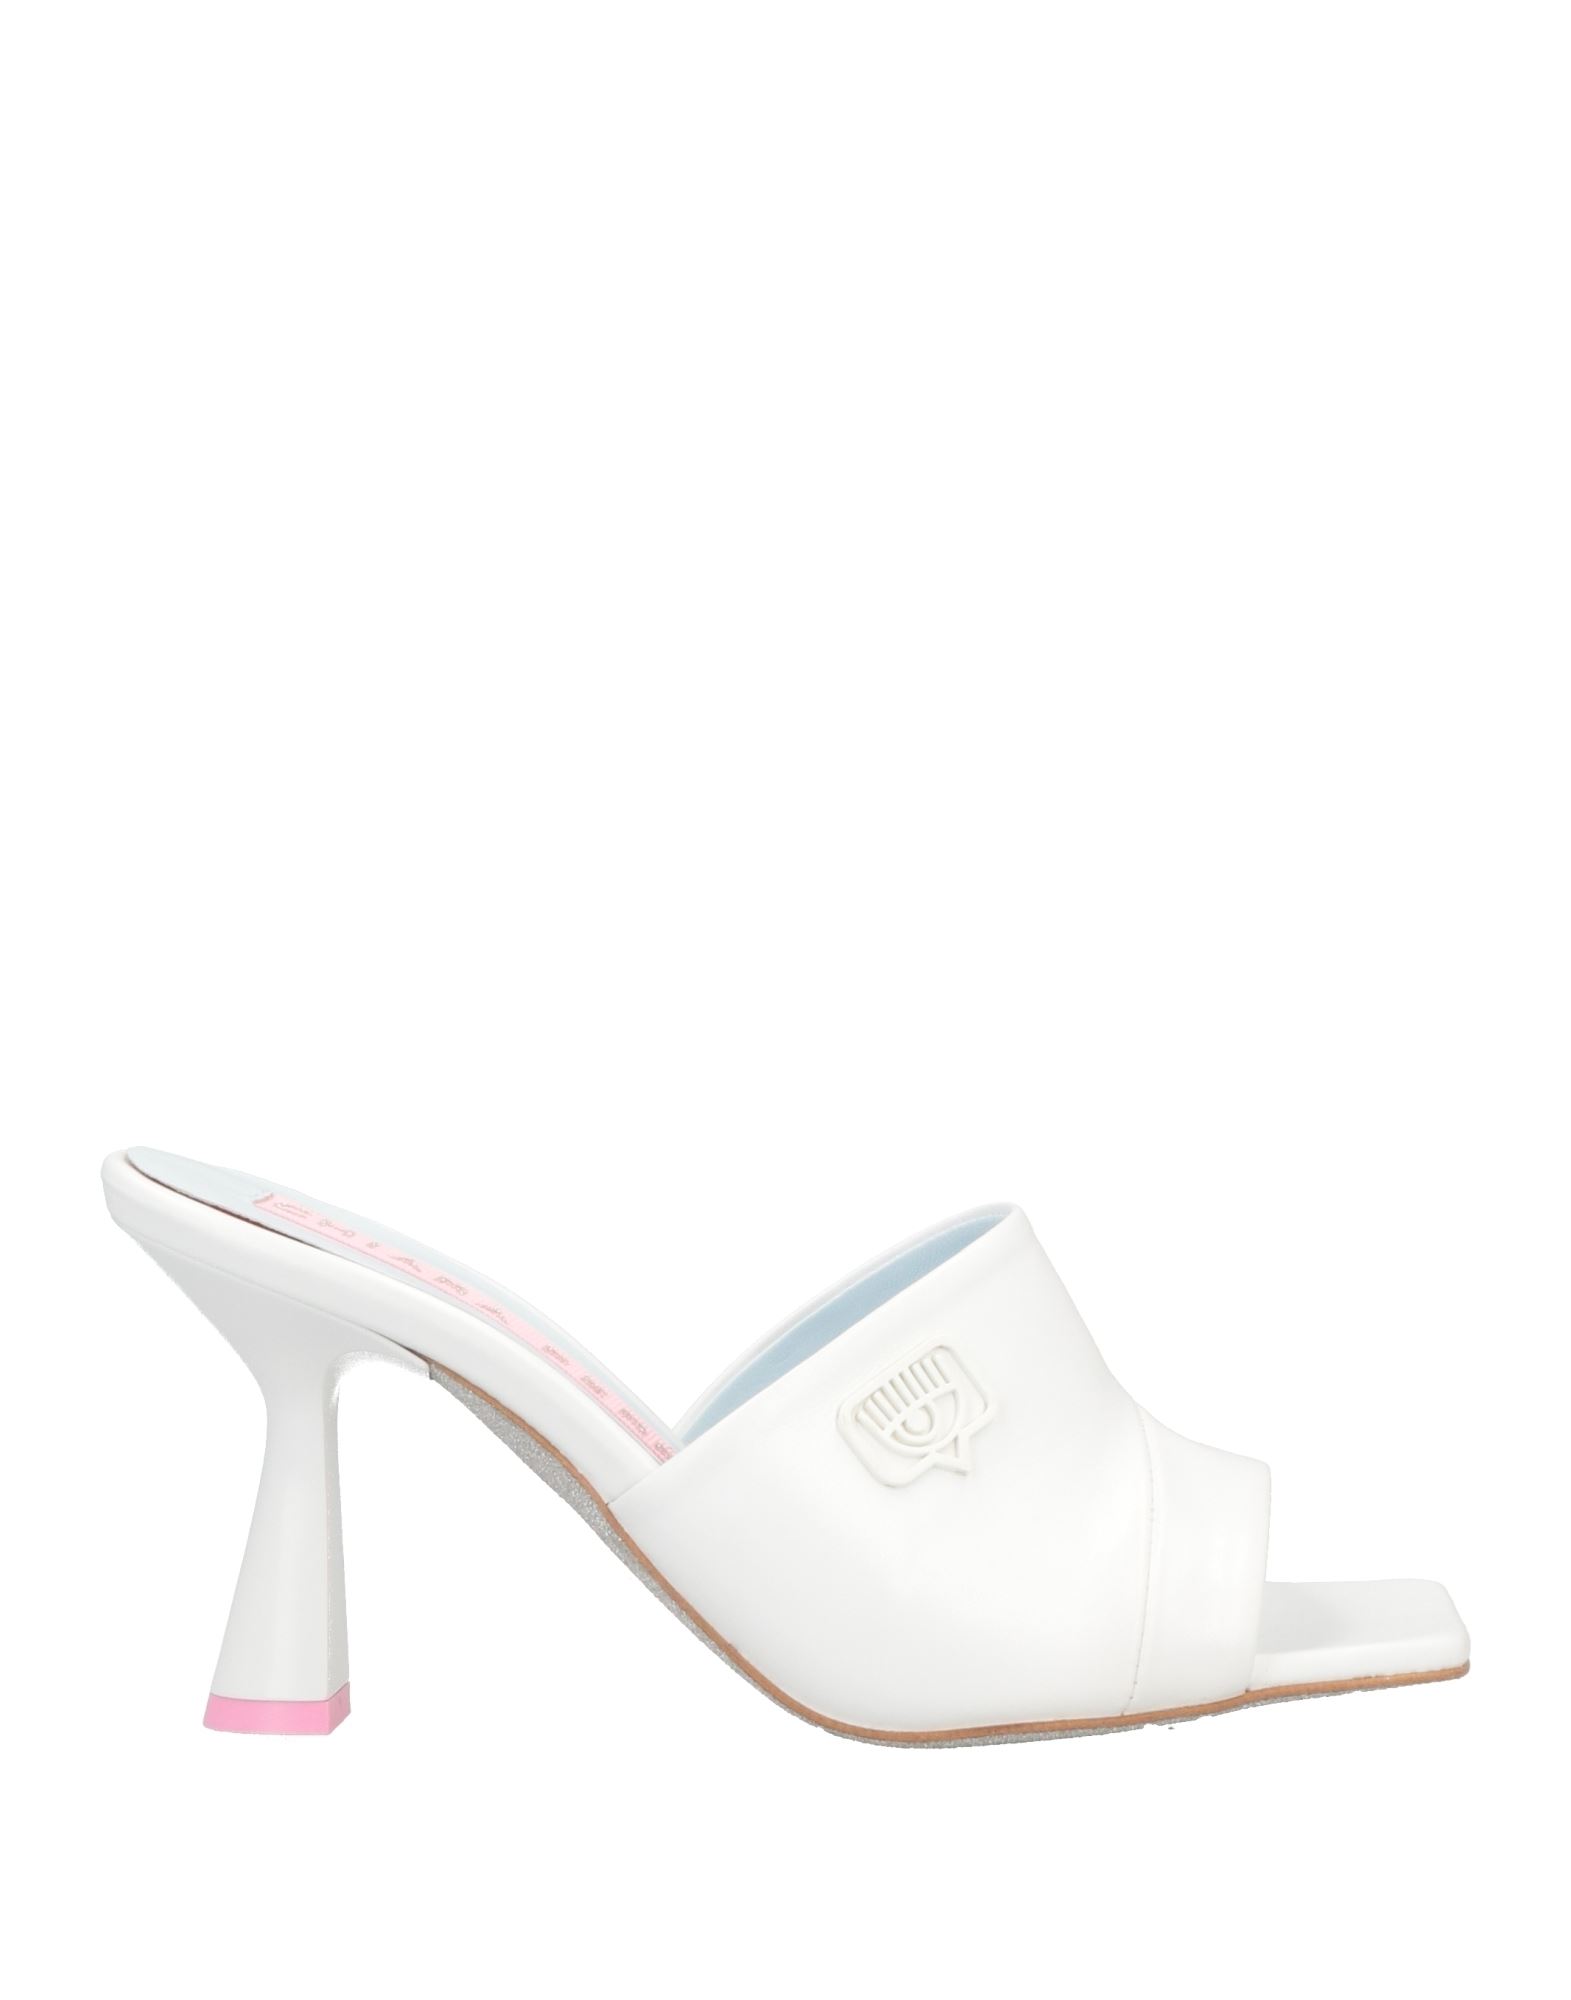 Chiara Ferragni Sandals In White